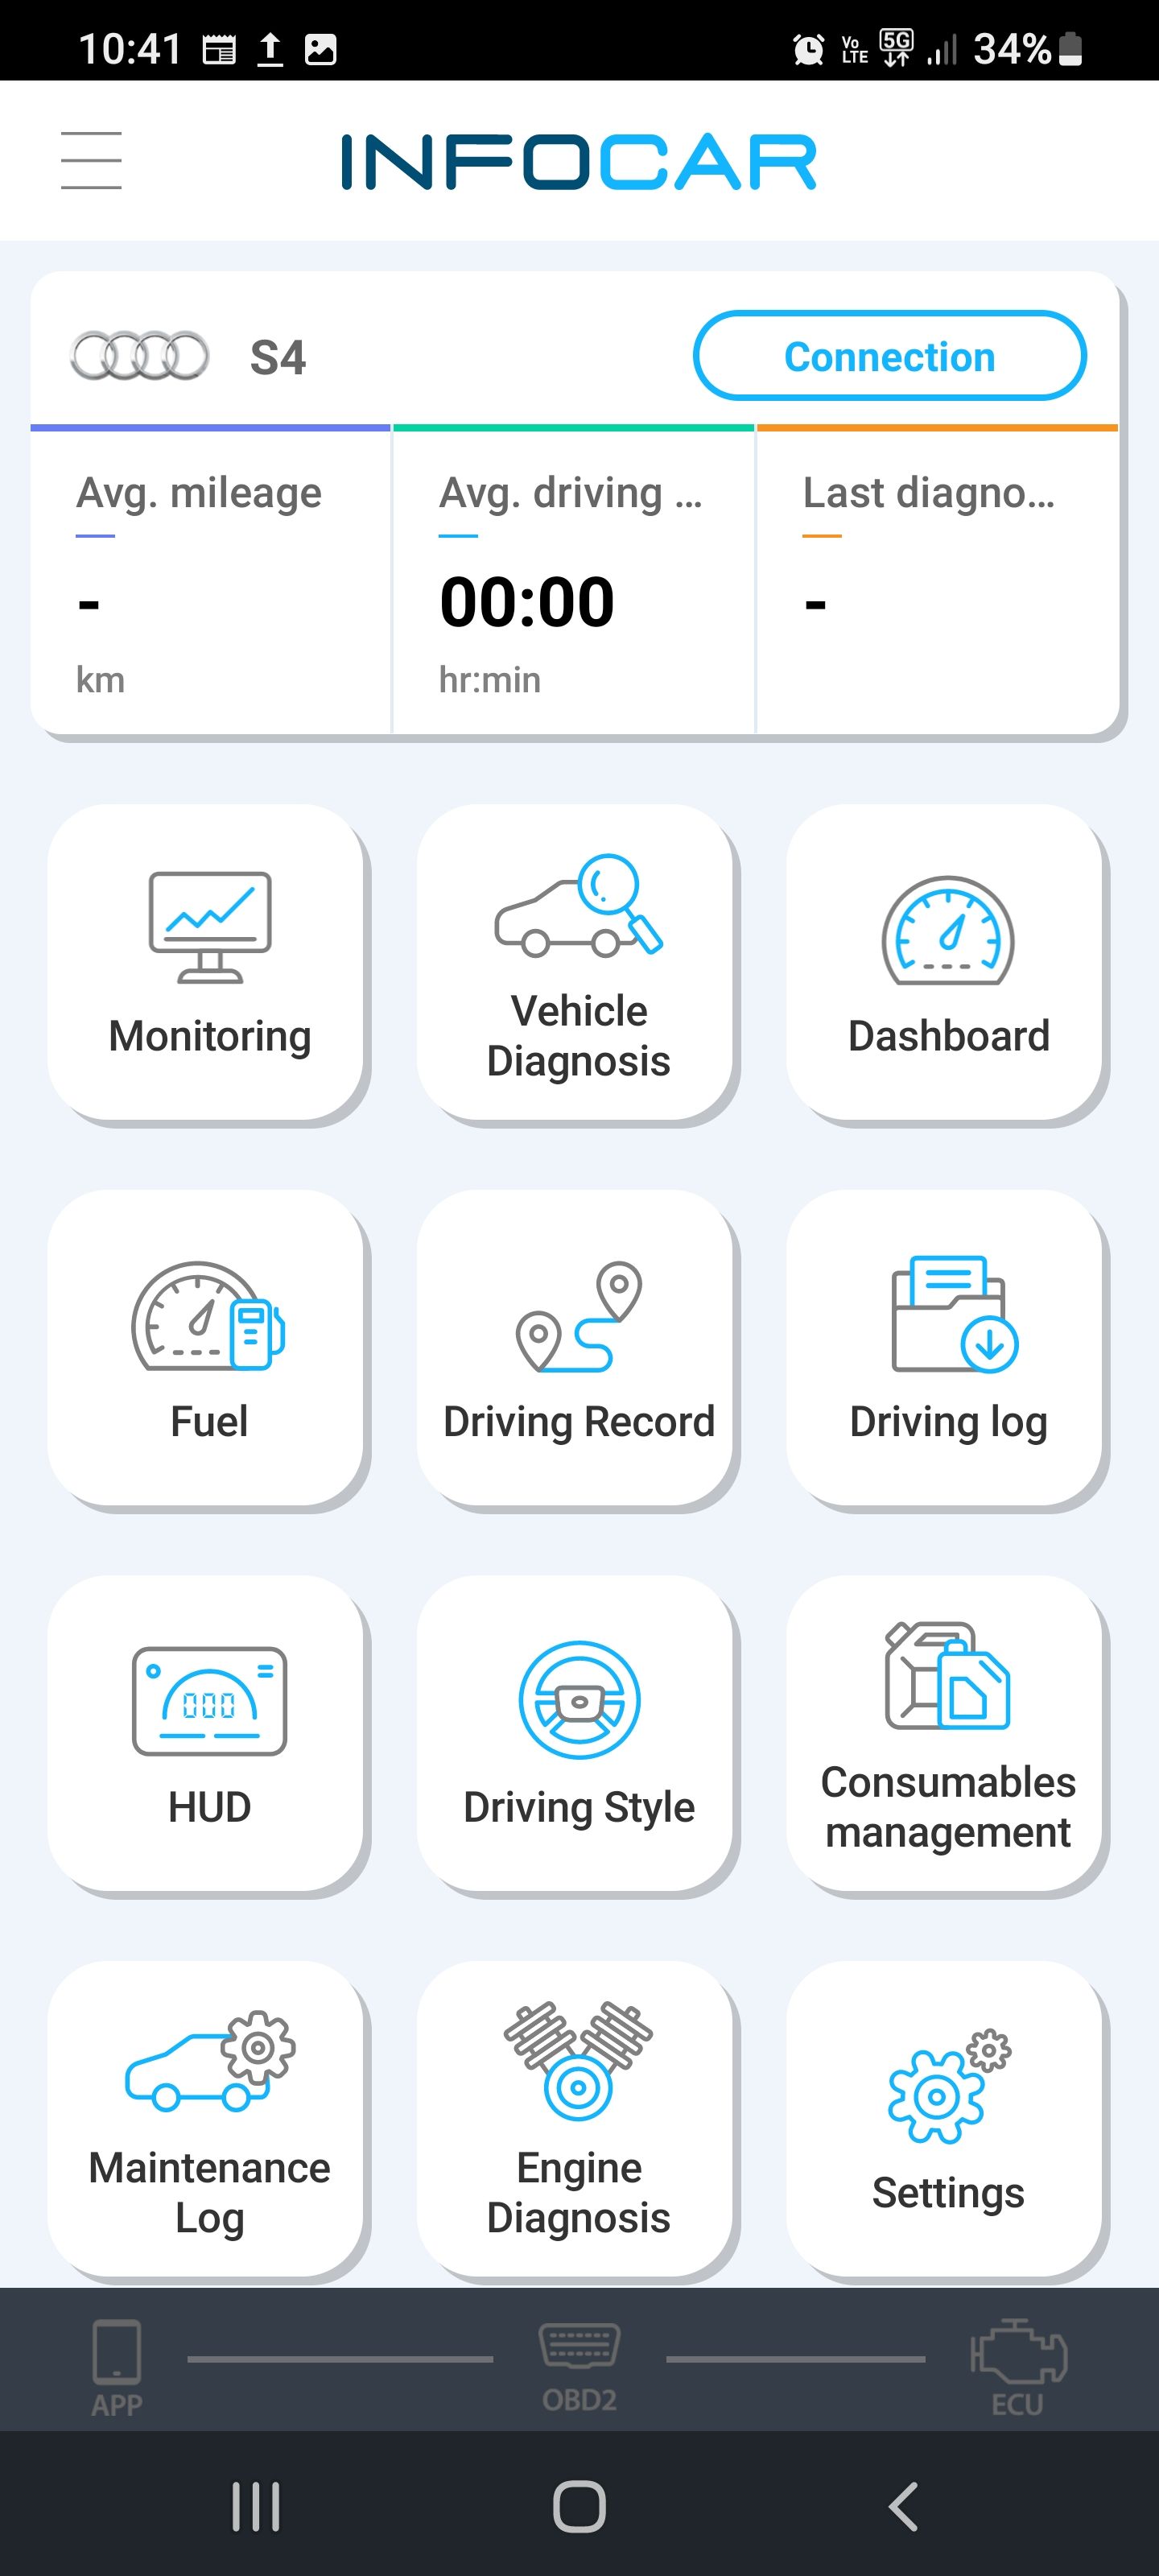 Infocar app screenshot showing main menu